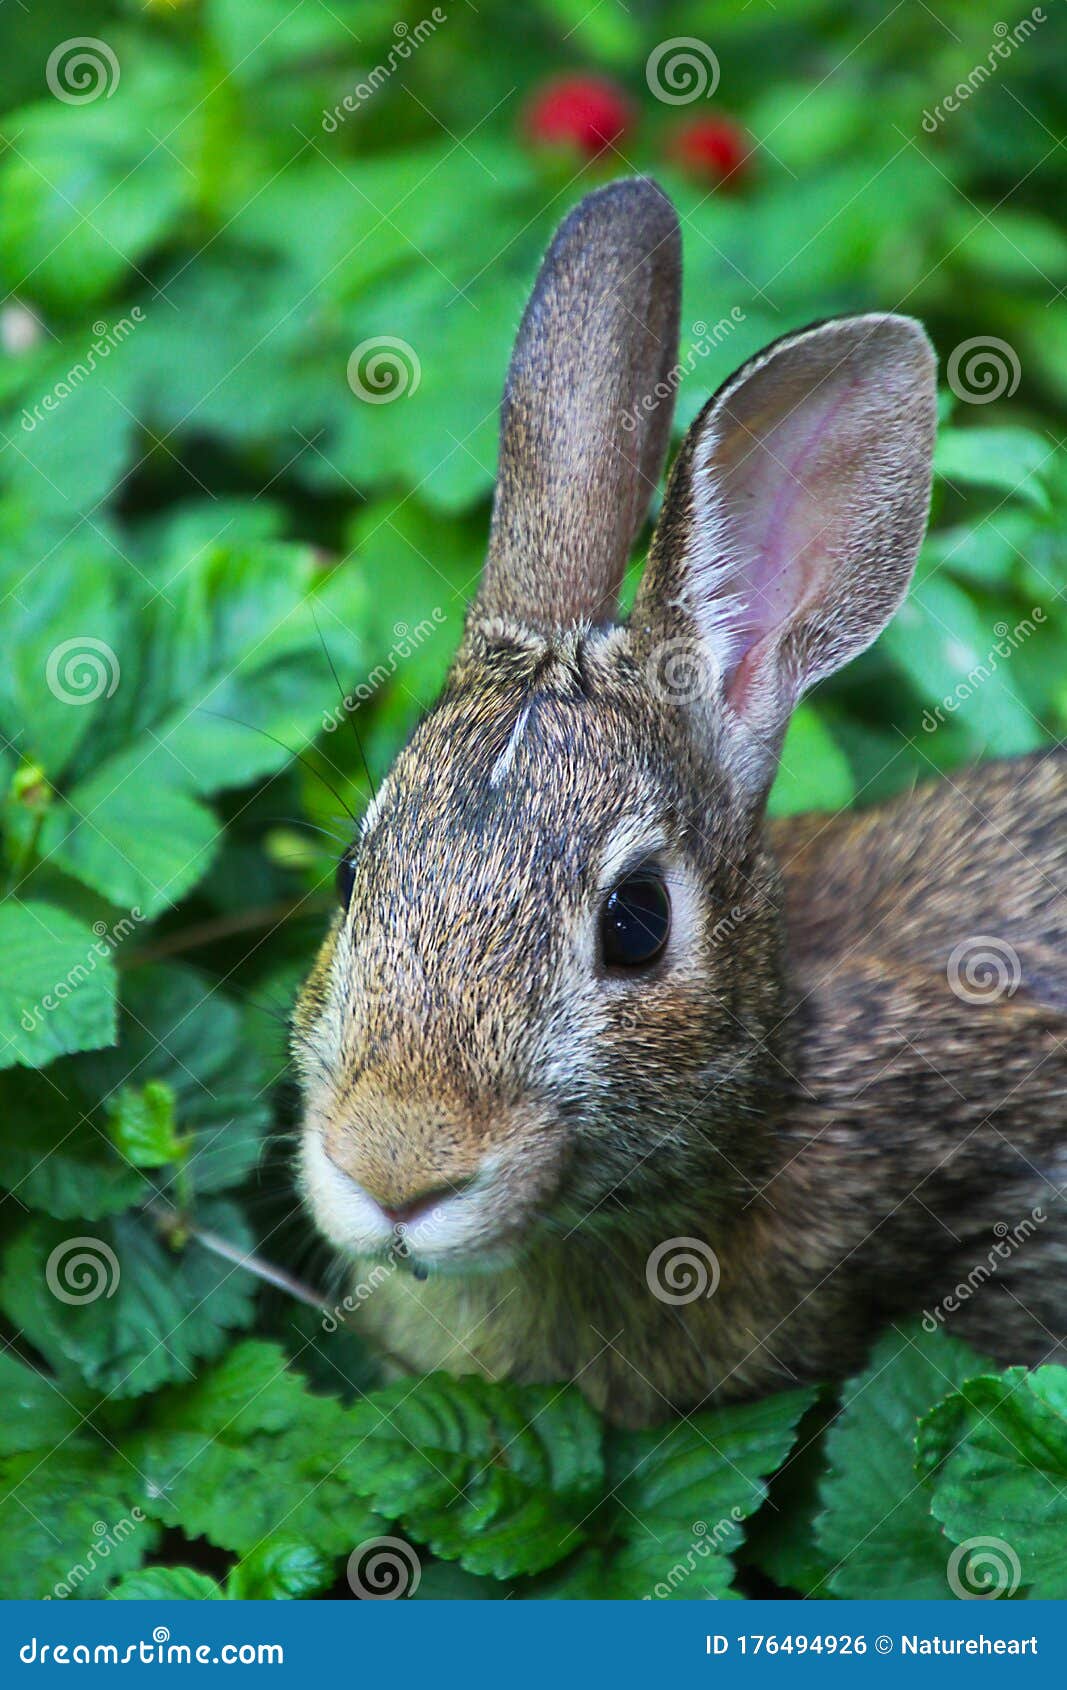 adorable bunny face in strawberry patch sylvilagus floridanus